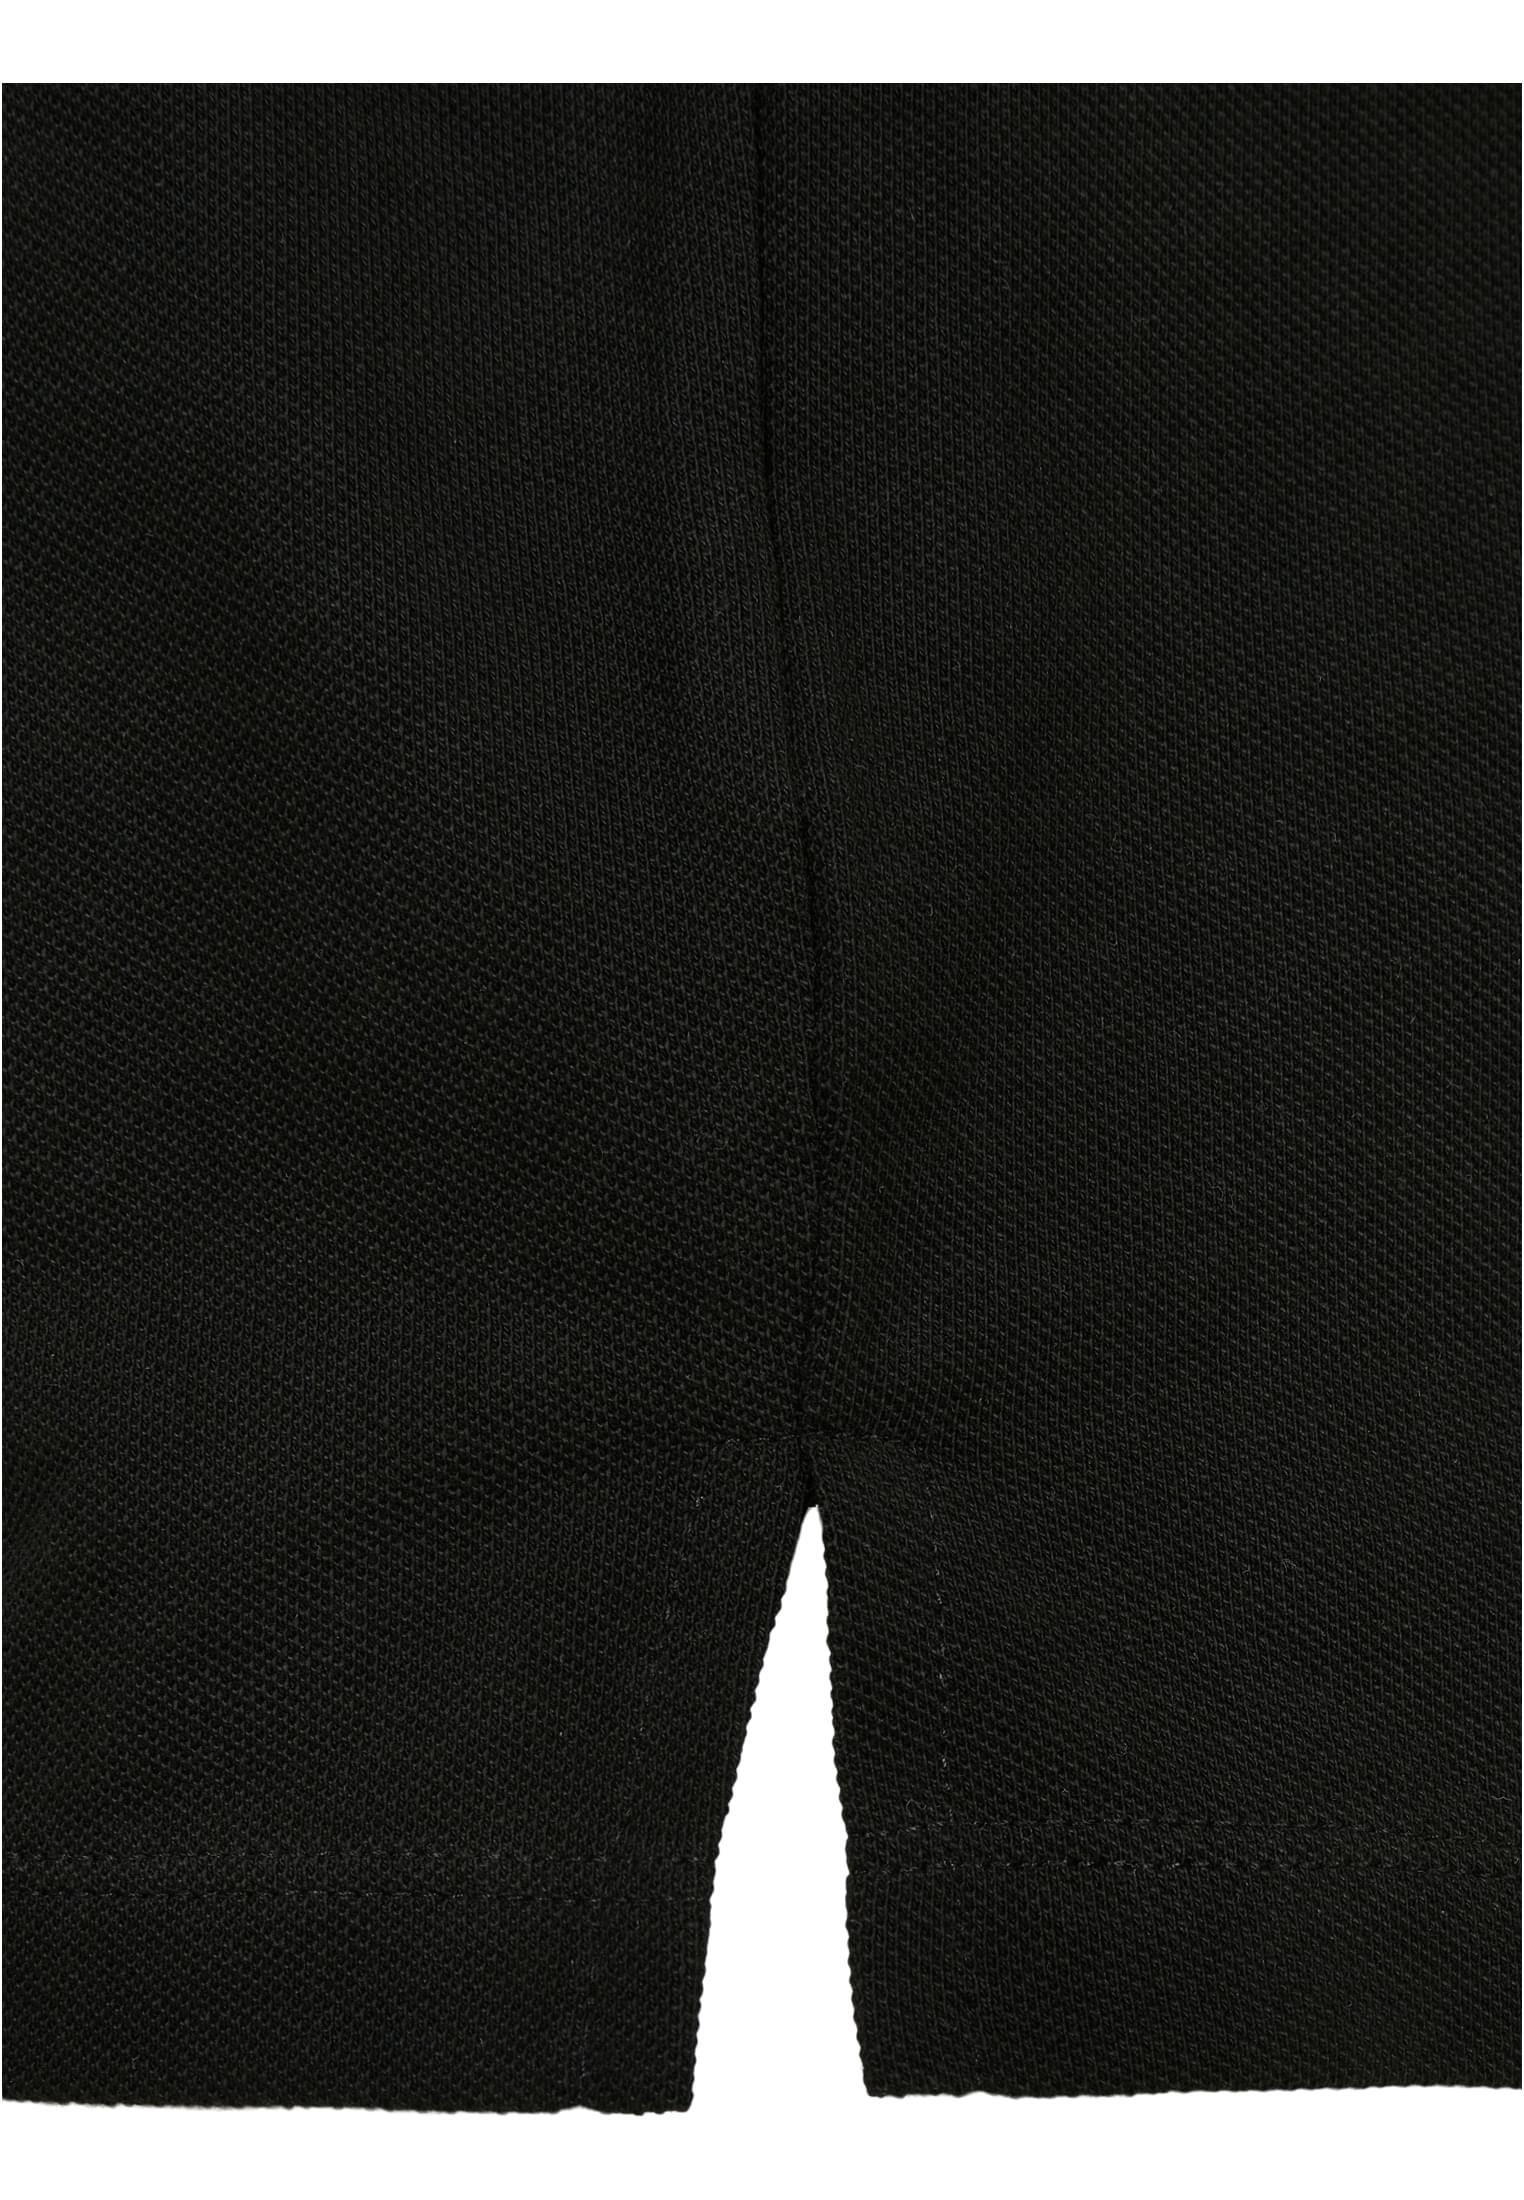 Hemden Oversized Polo in Farbe black